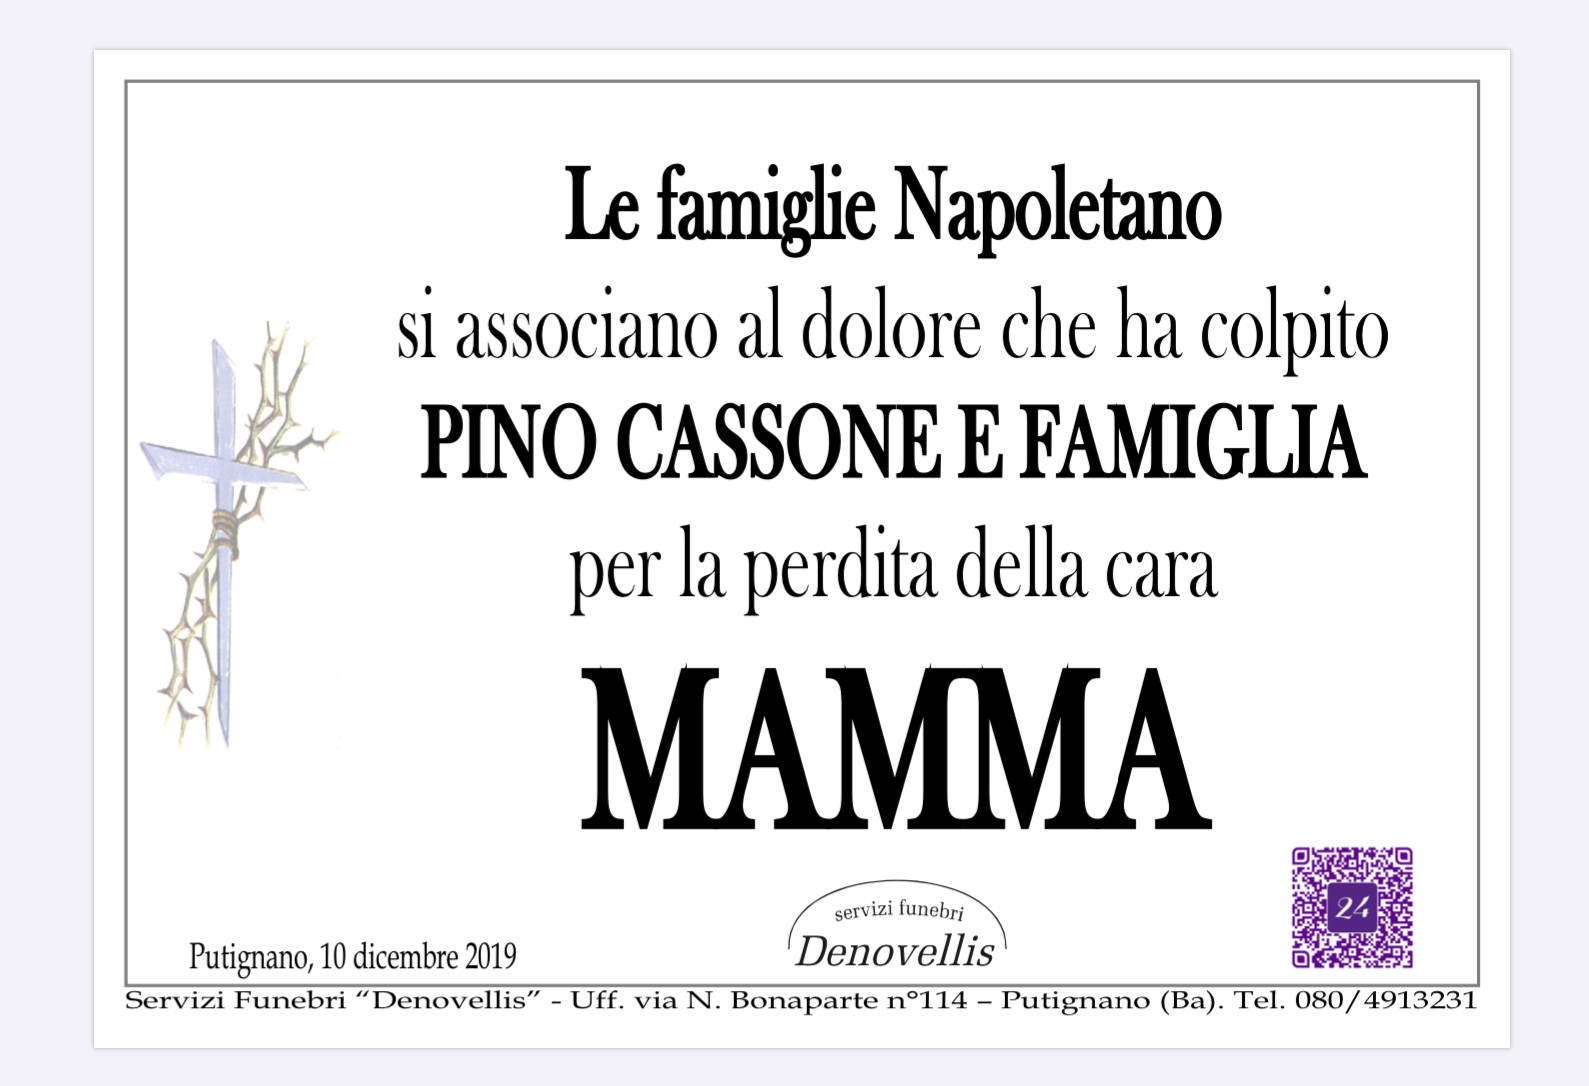 Famiglie Napoletano